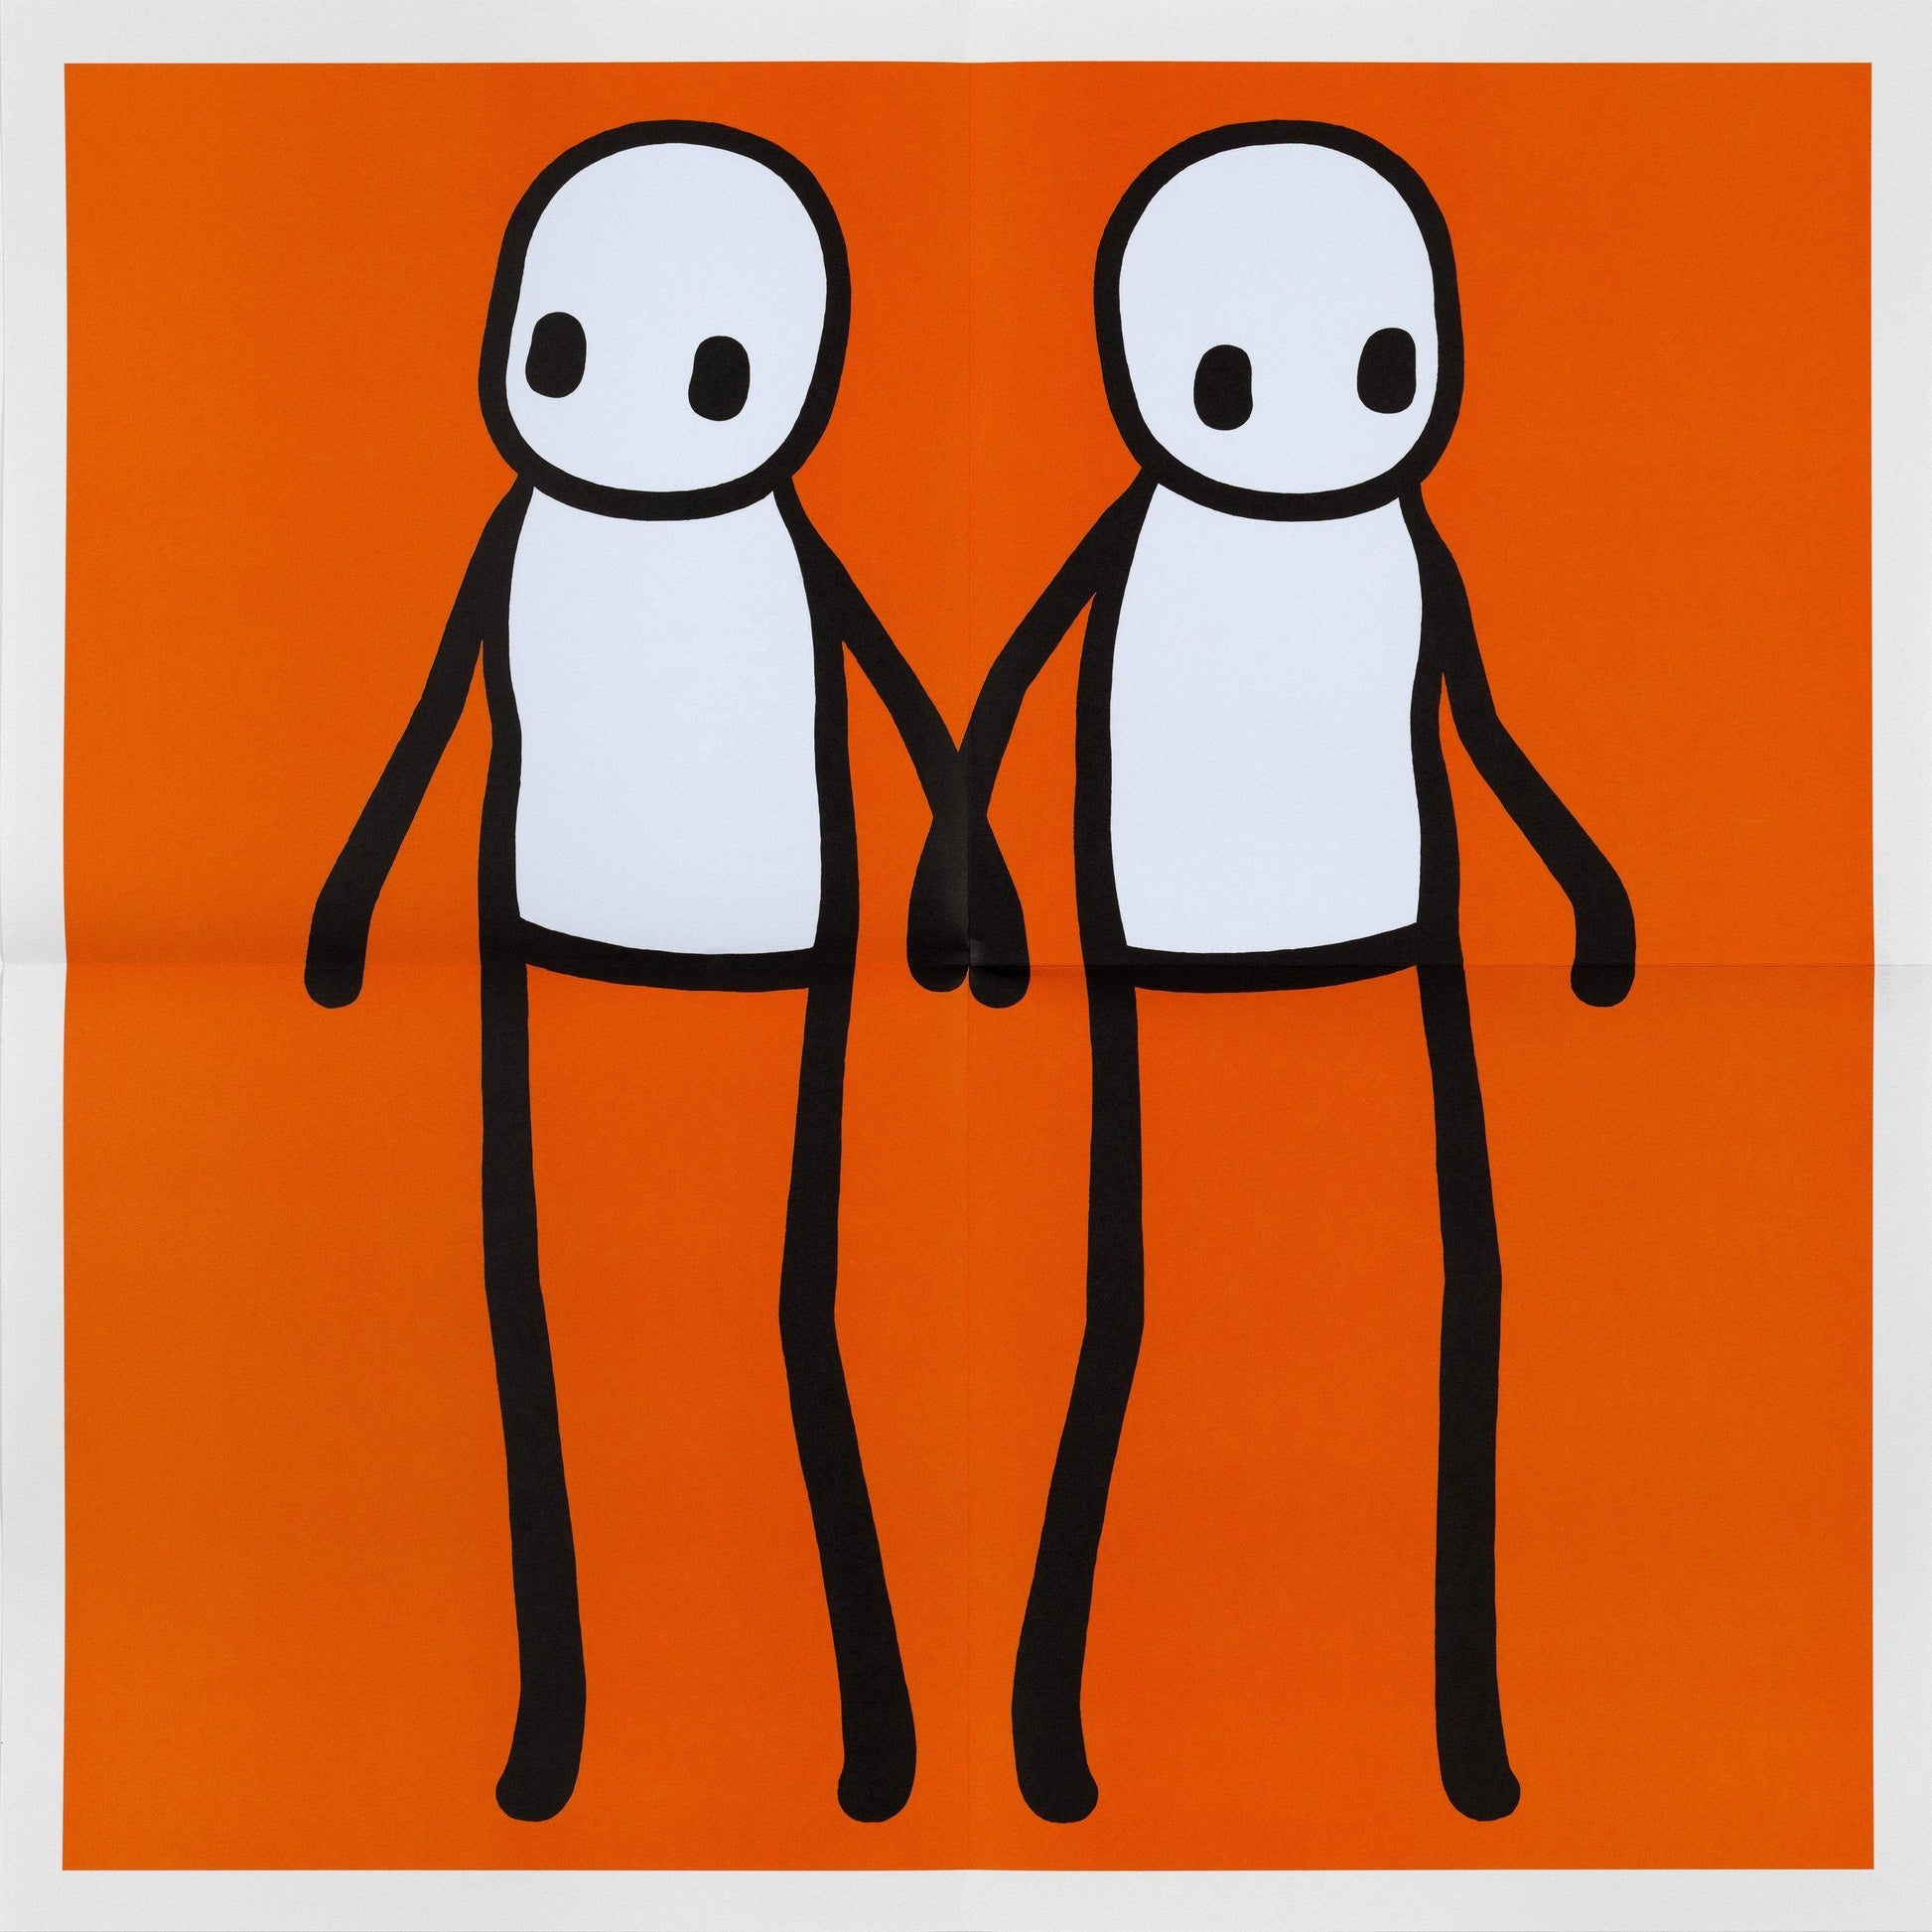 STIK Holding Hands ornage print featuring 2 stik men holding hands on an orange background 